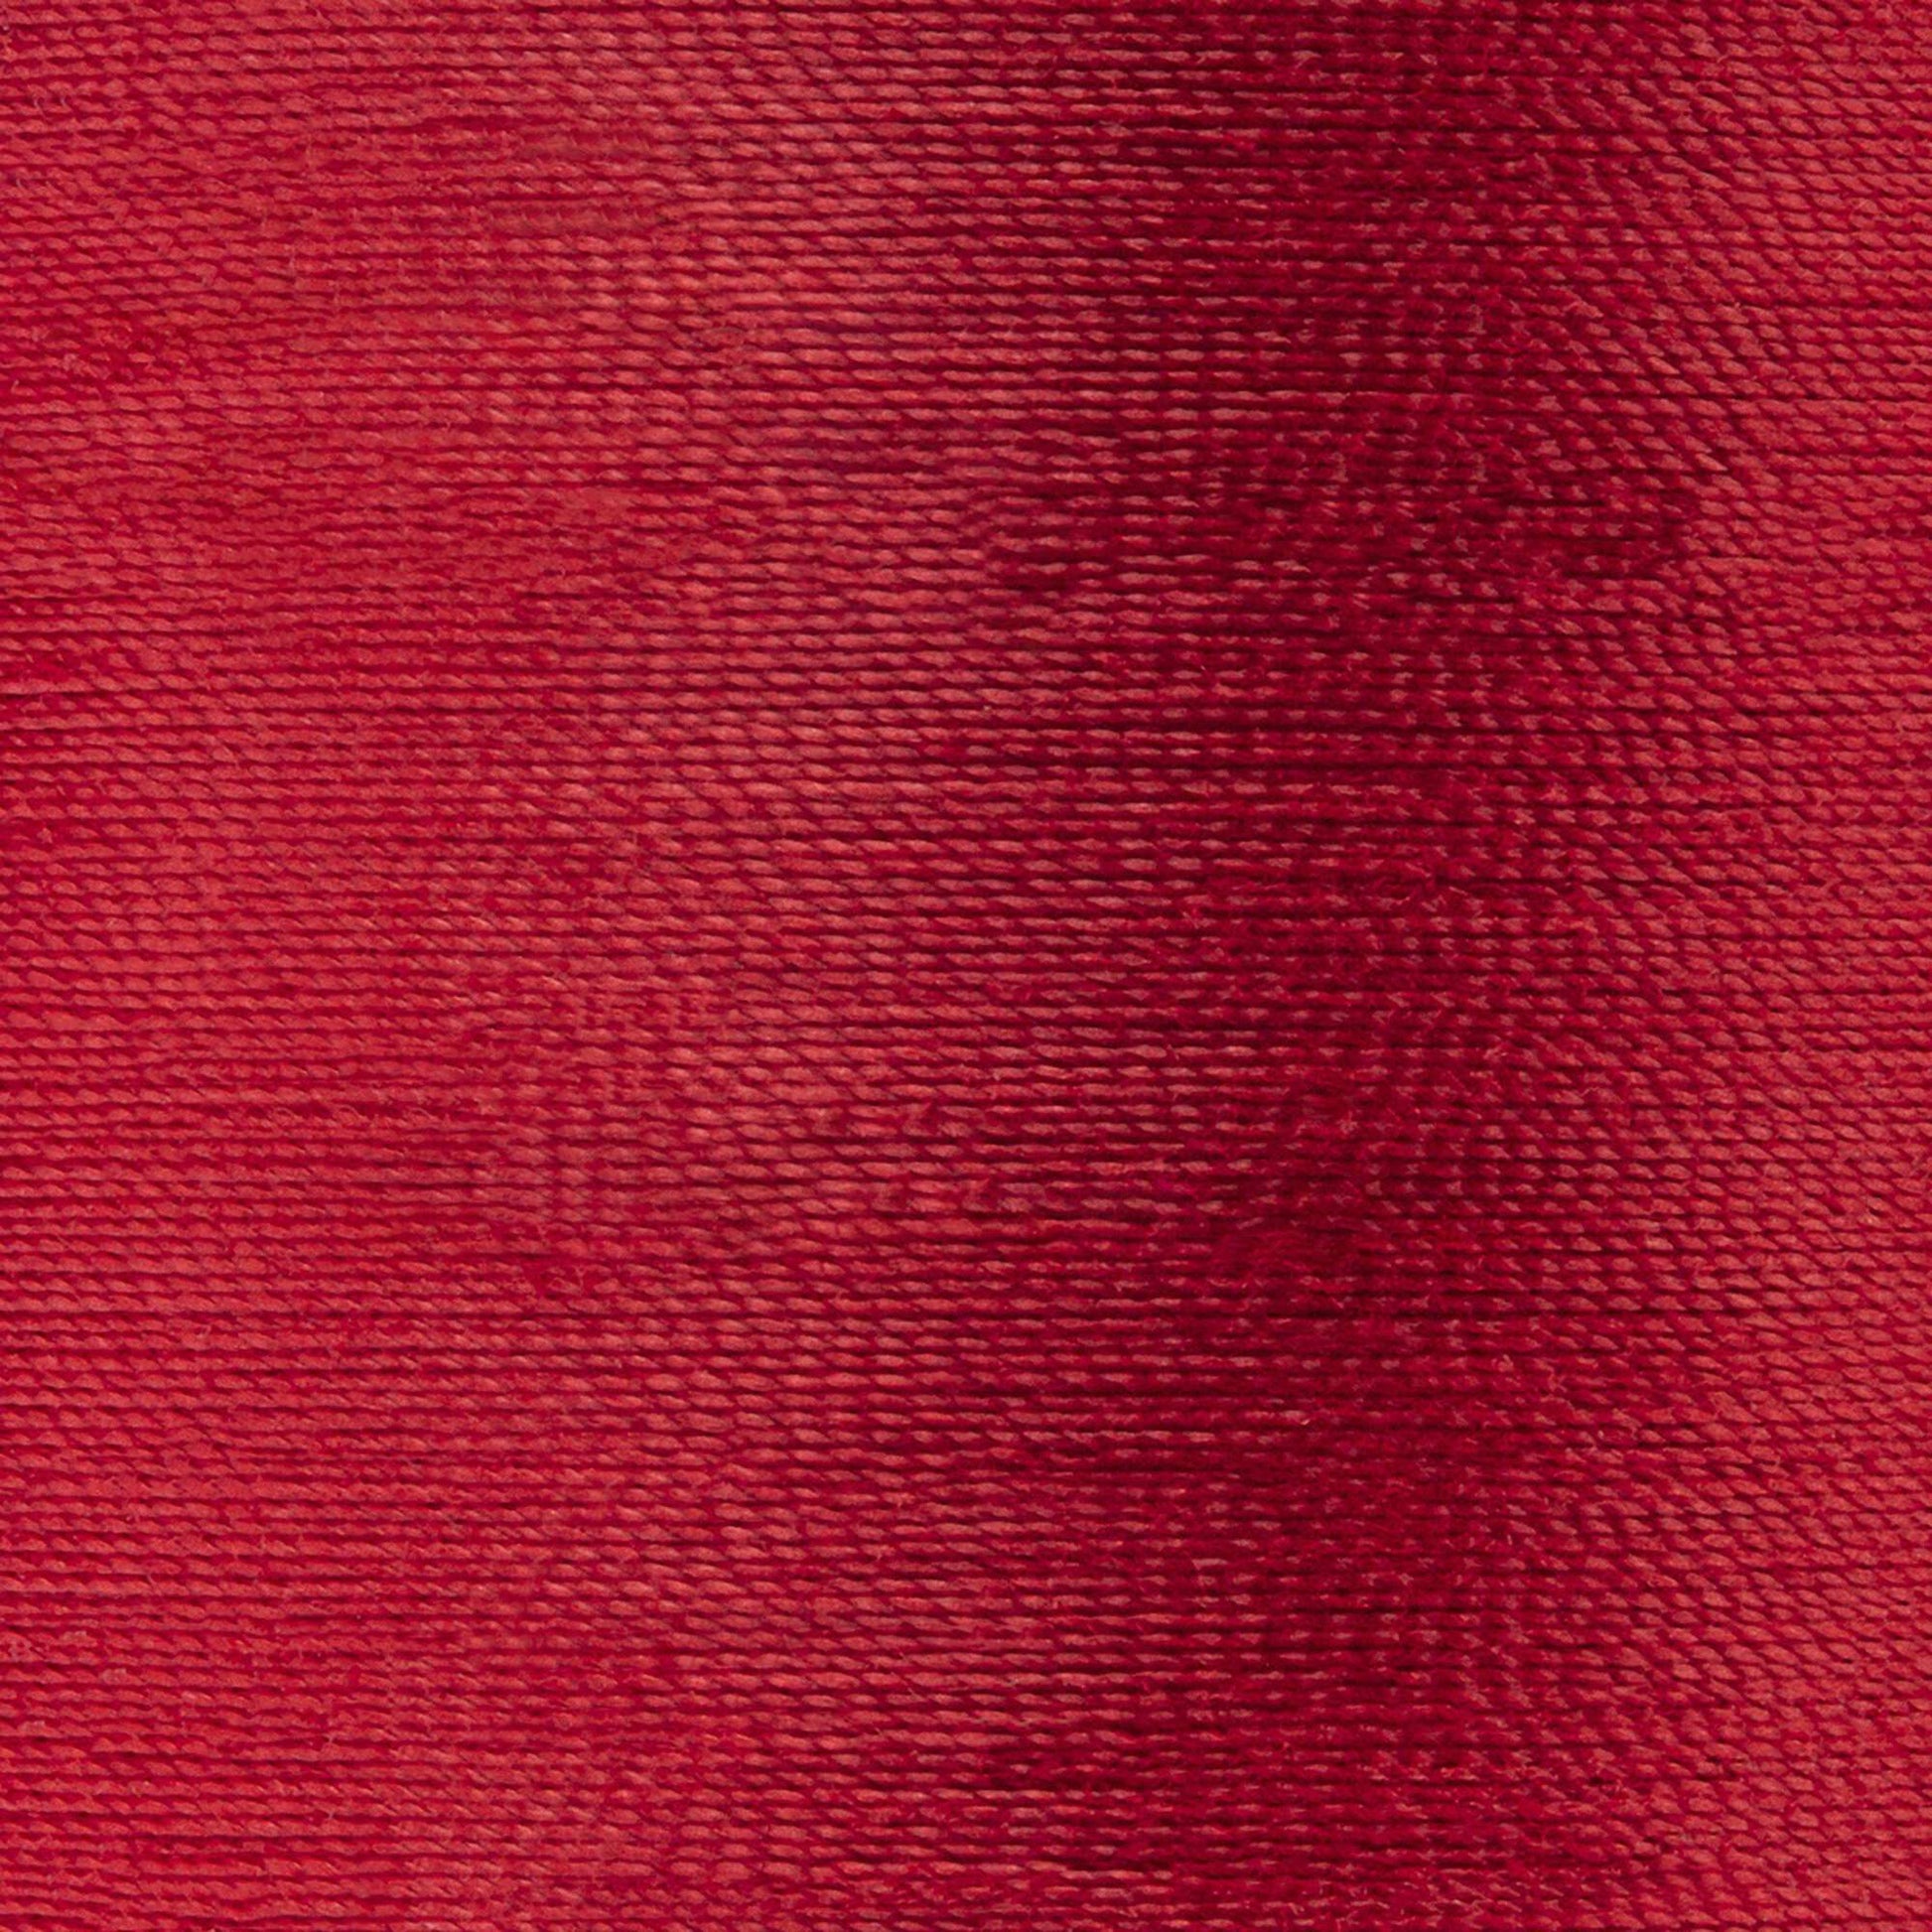 Coats & Clark All Purpose Thread (500 Yards) Red